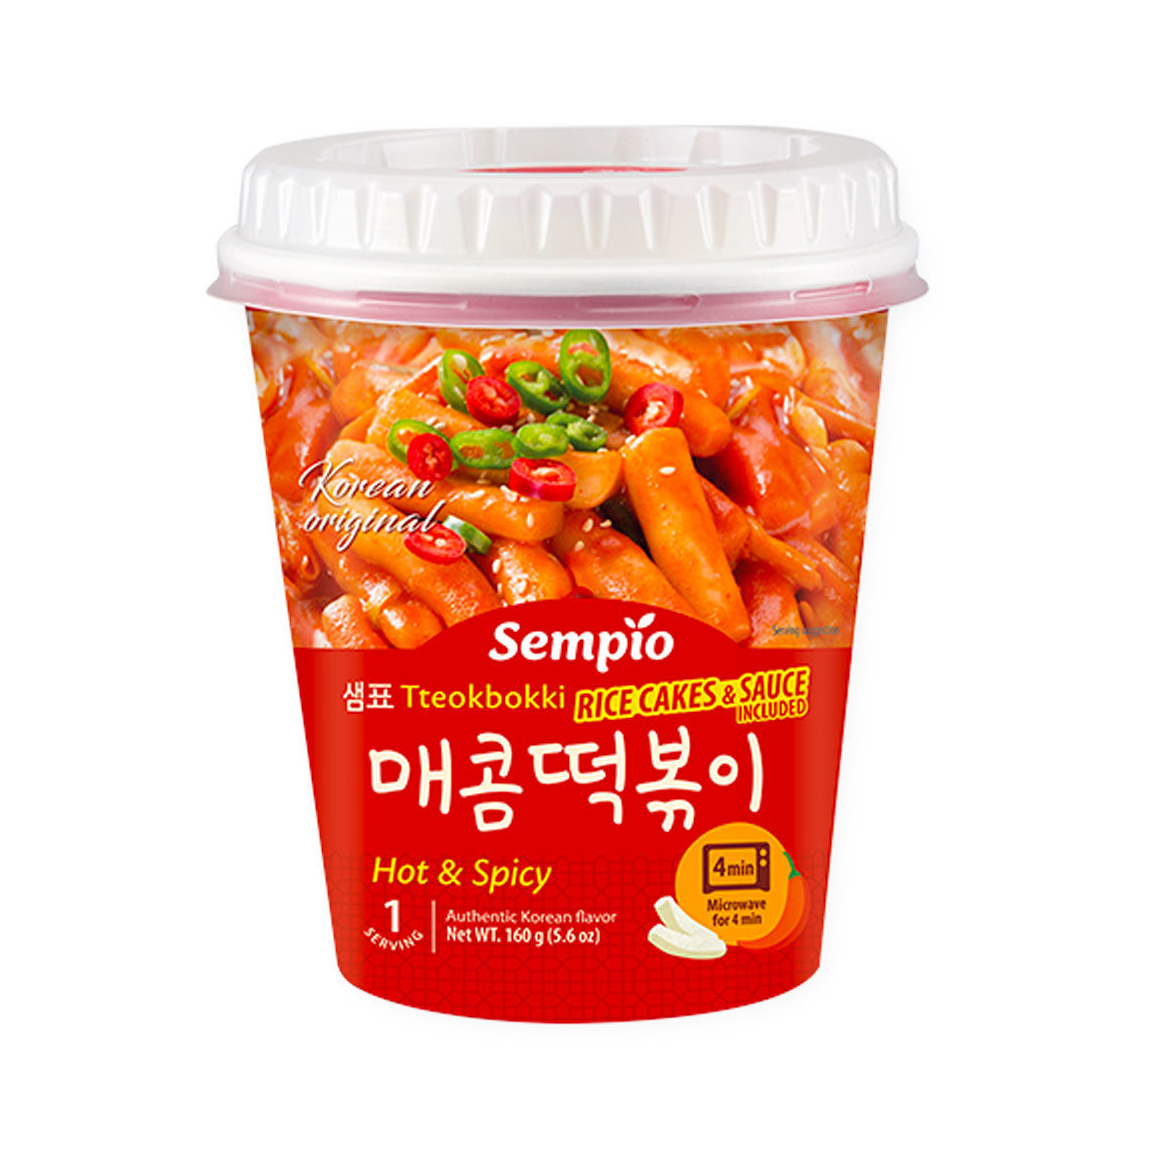 Noodles si noodles instant - Instant Tteokbokki Hot&Spicy CUP SEMPIO 160g, asianfood.ro